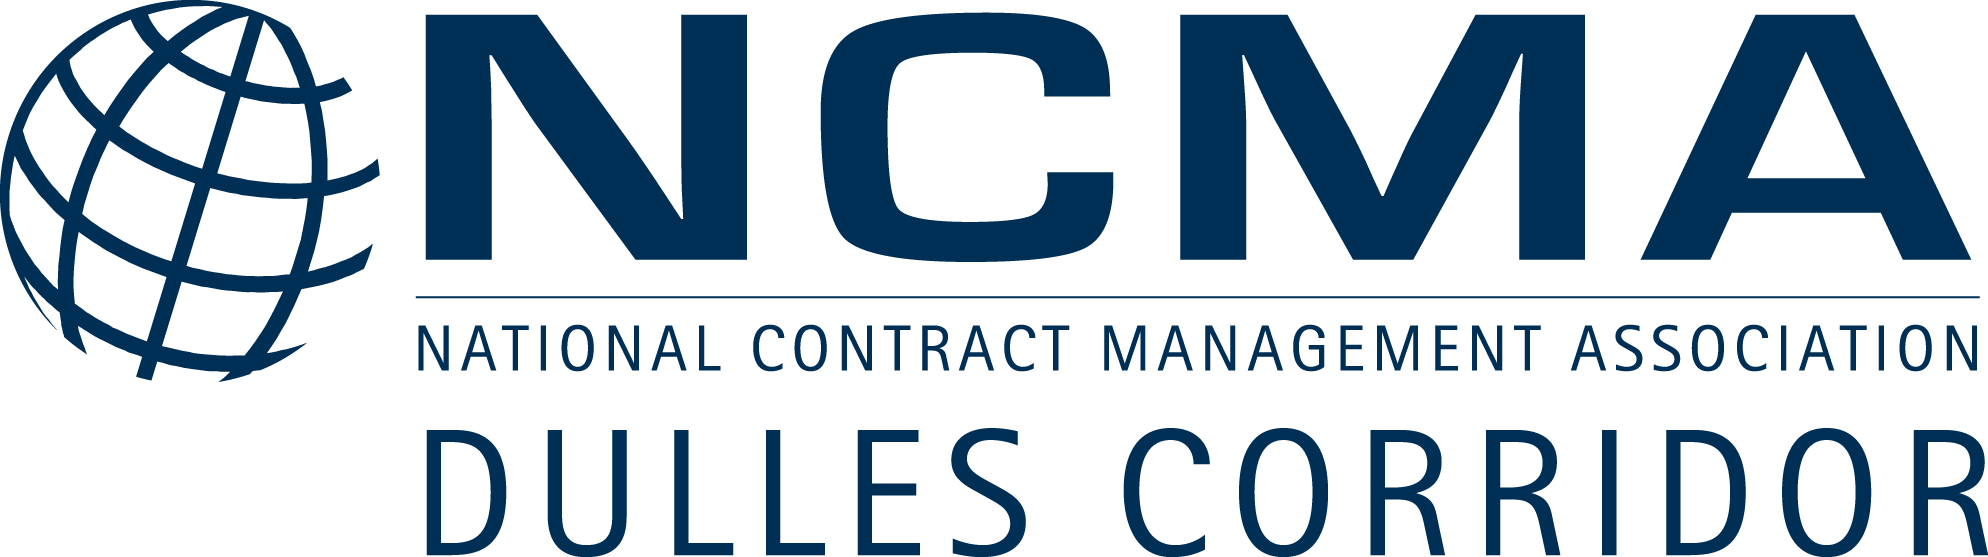 Ncma Dulles Corridor - National Contract Management Association Clipart (1988x557), Png Download